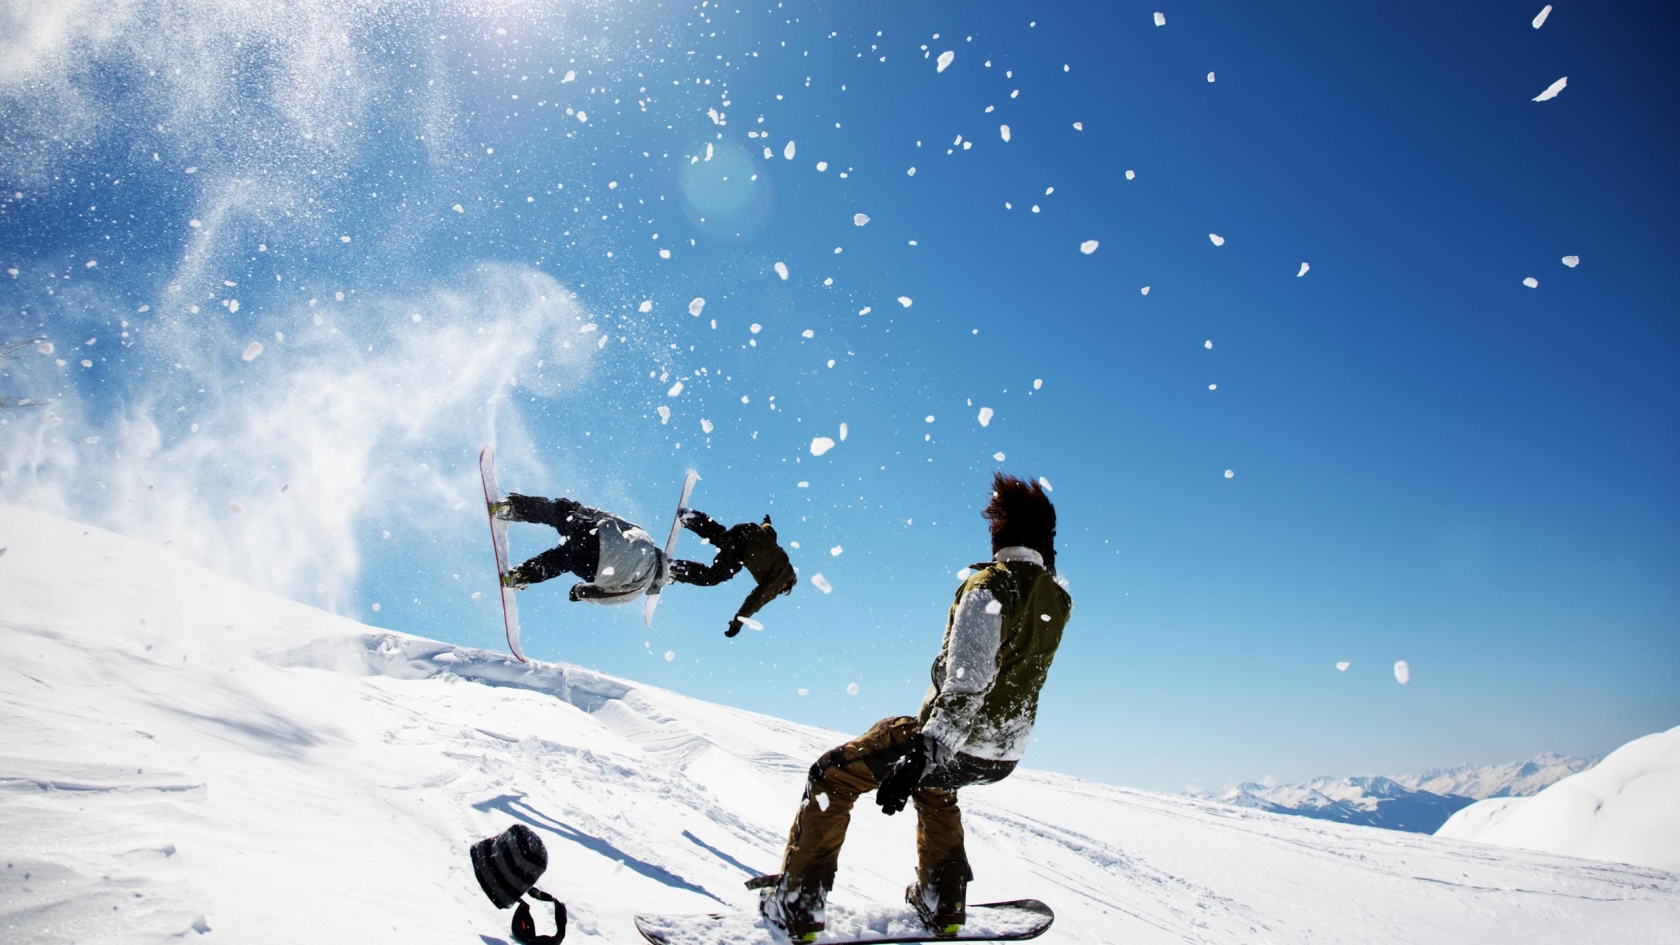 Winter Snowboarding for 1680 x 945 HDTV resolution